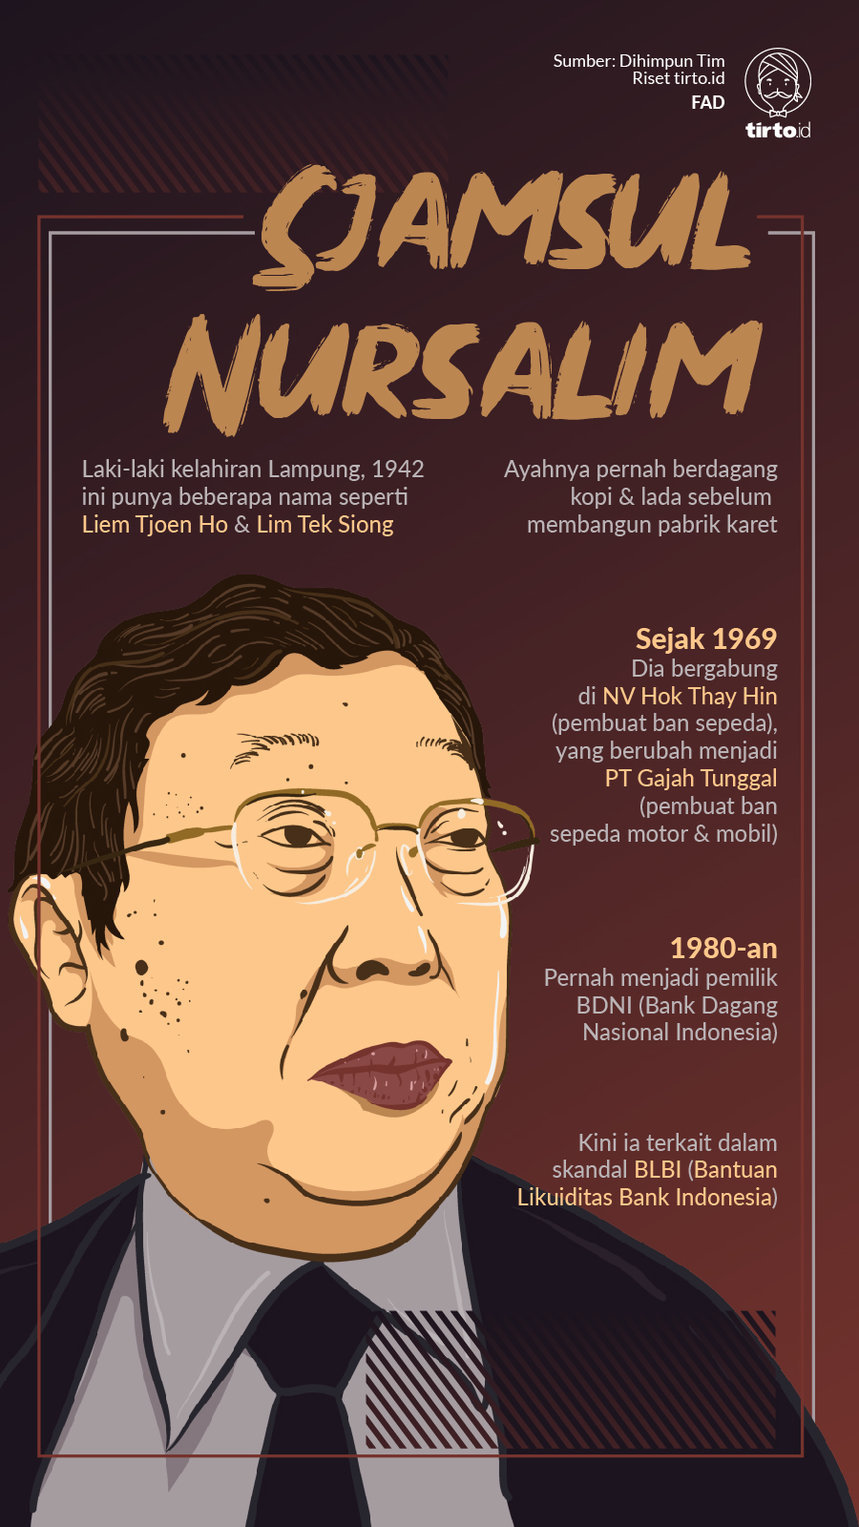 Infografik Sjamsul Nursalim